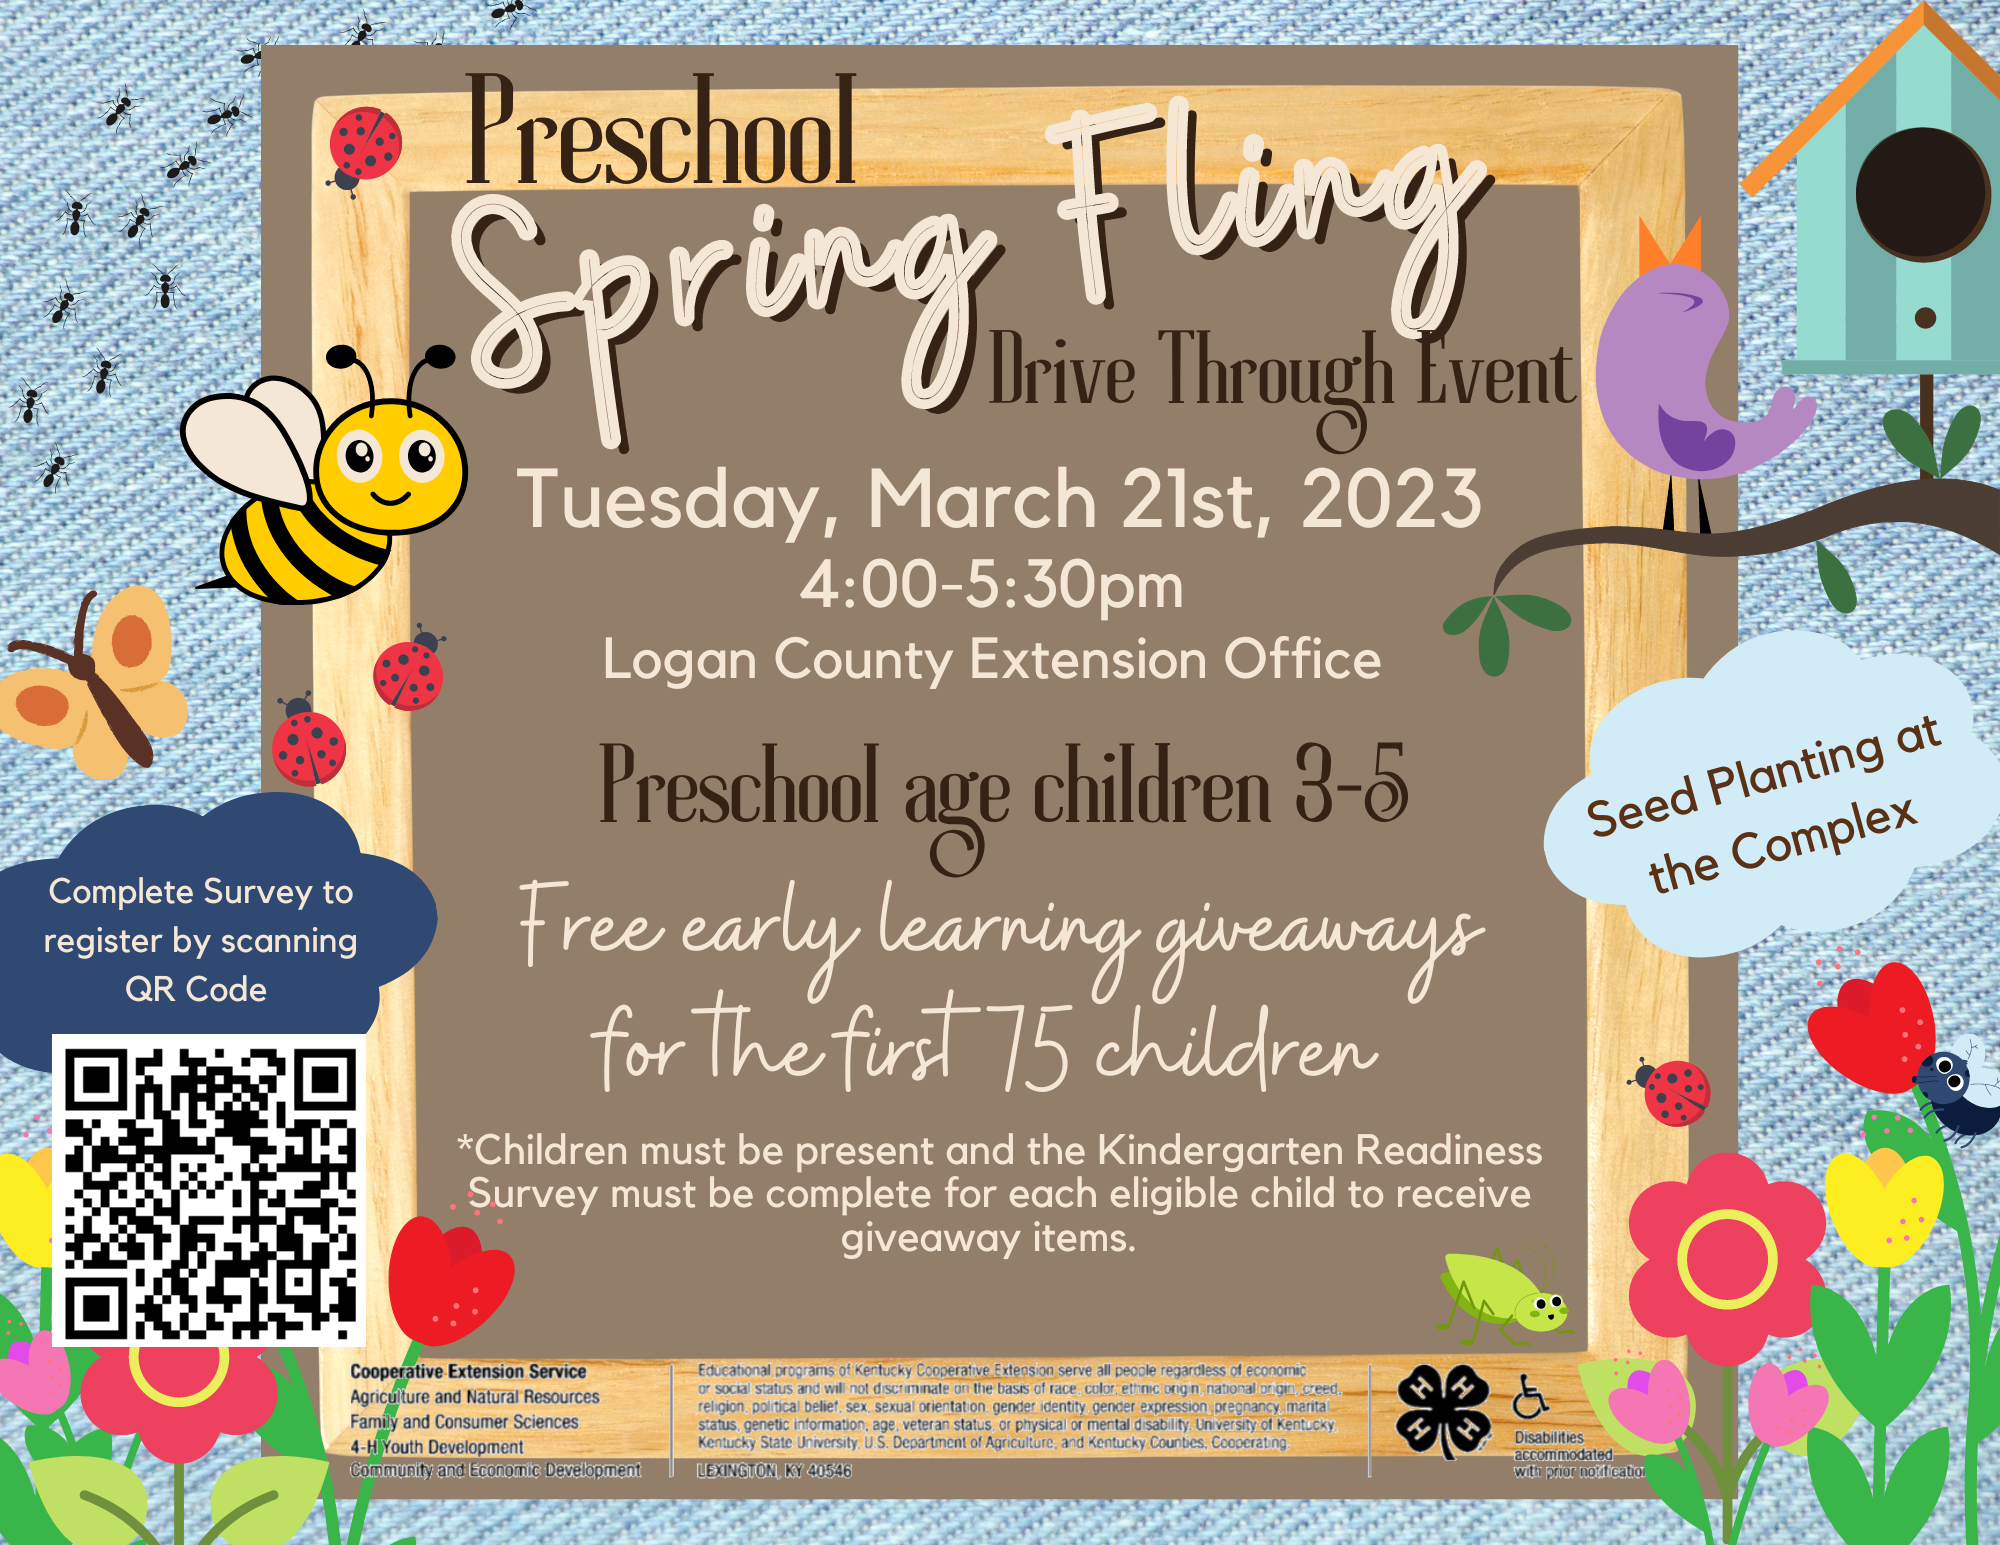 Preschool Spring Fling Drive Through Logan County Extension Office